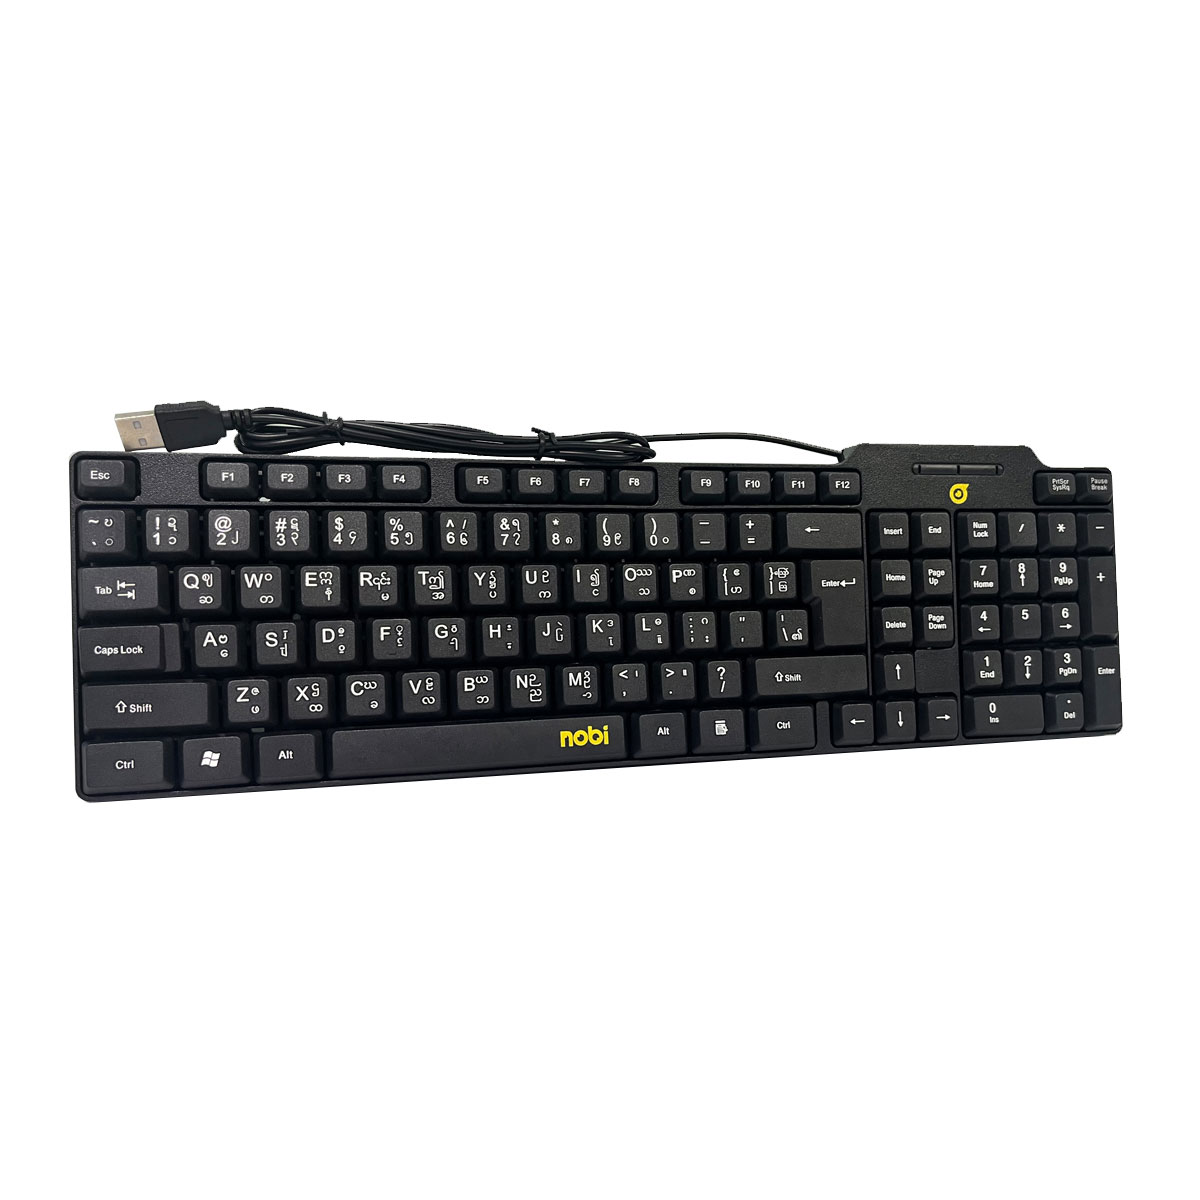 nk01-wired-keyboard-03